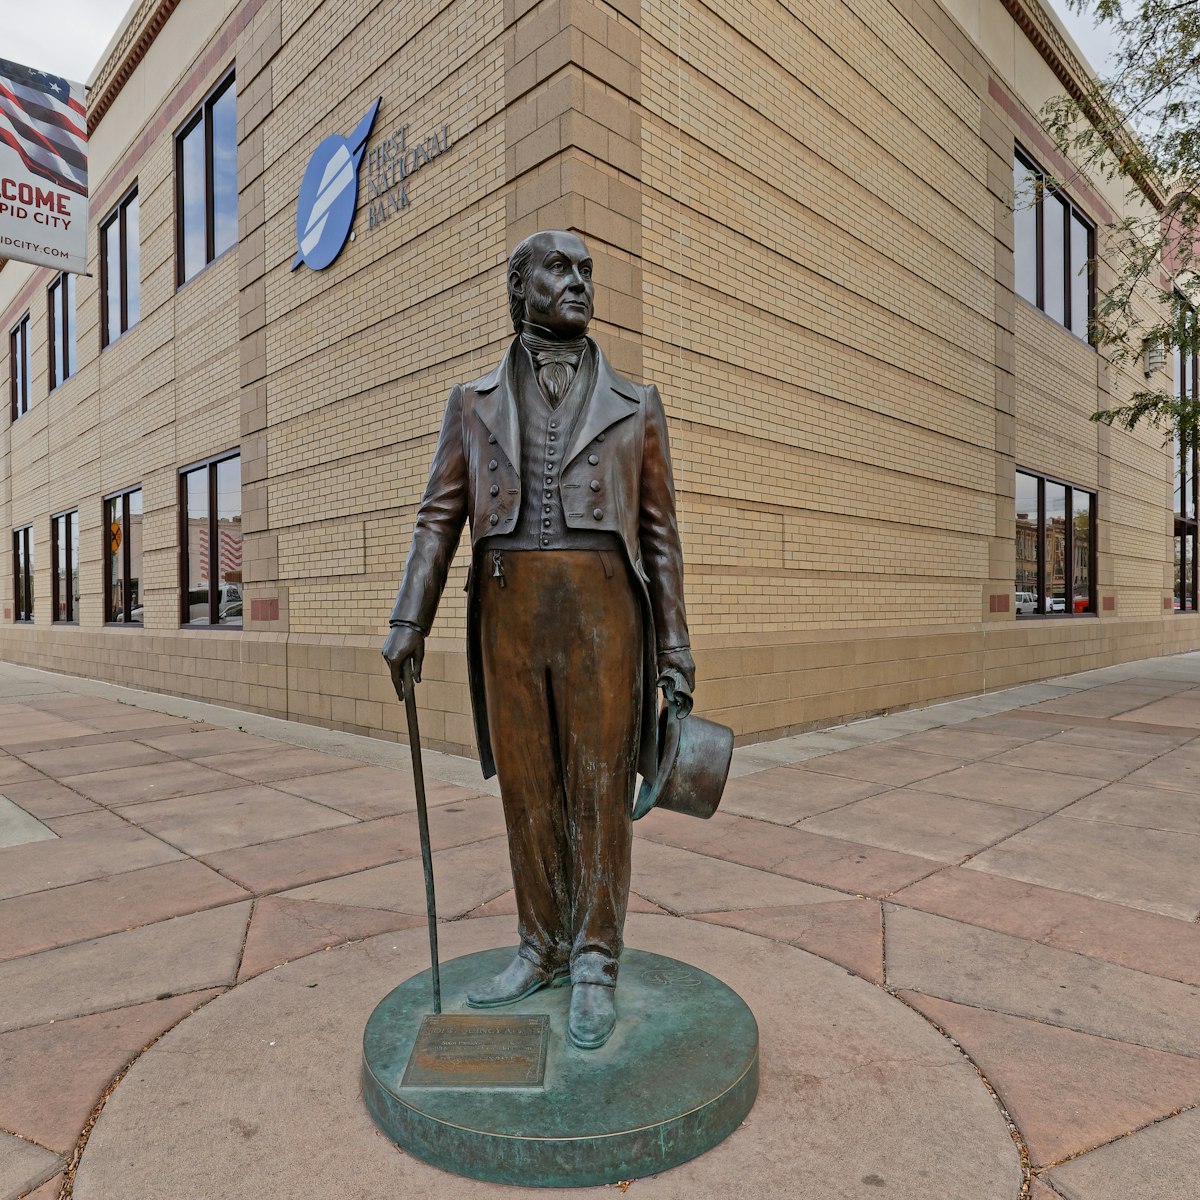 John Quincy Adams statue in Rapid City, South Dakota.